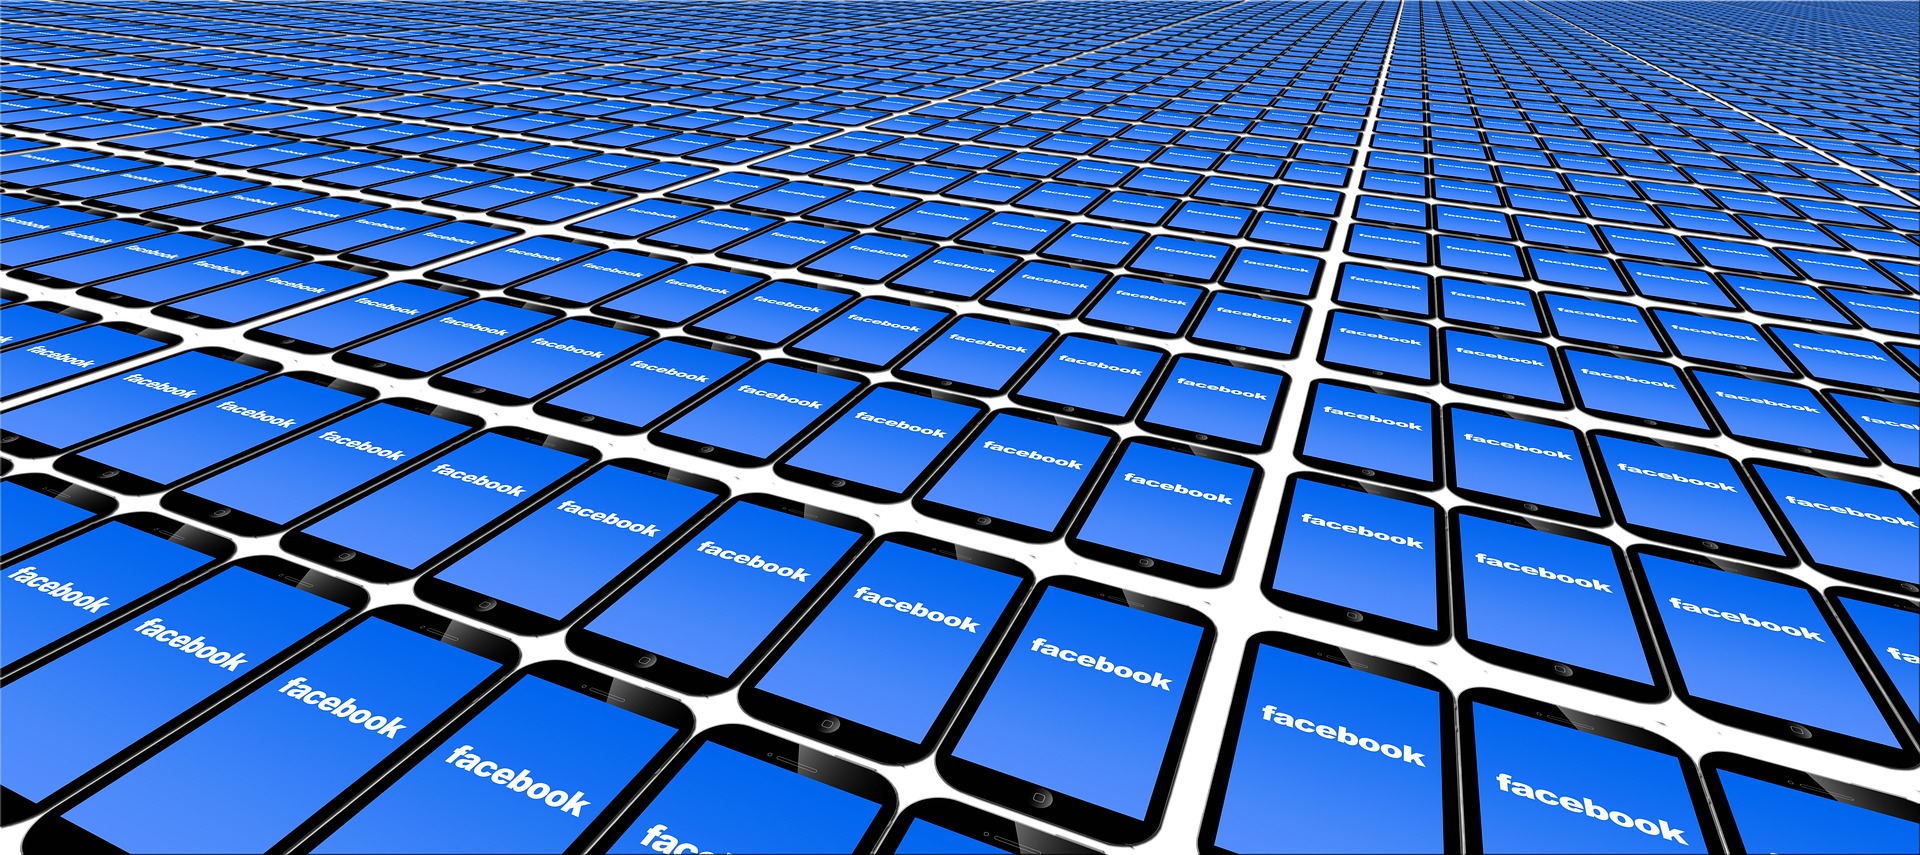 Stock photo of mobile phones with the Facebook logo. Credit Pixabay/Gerd Altmann